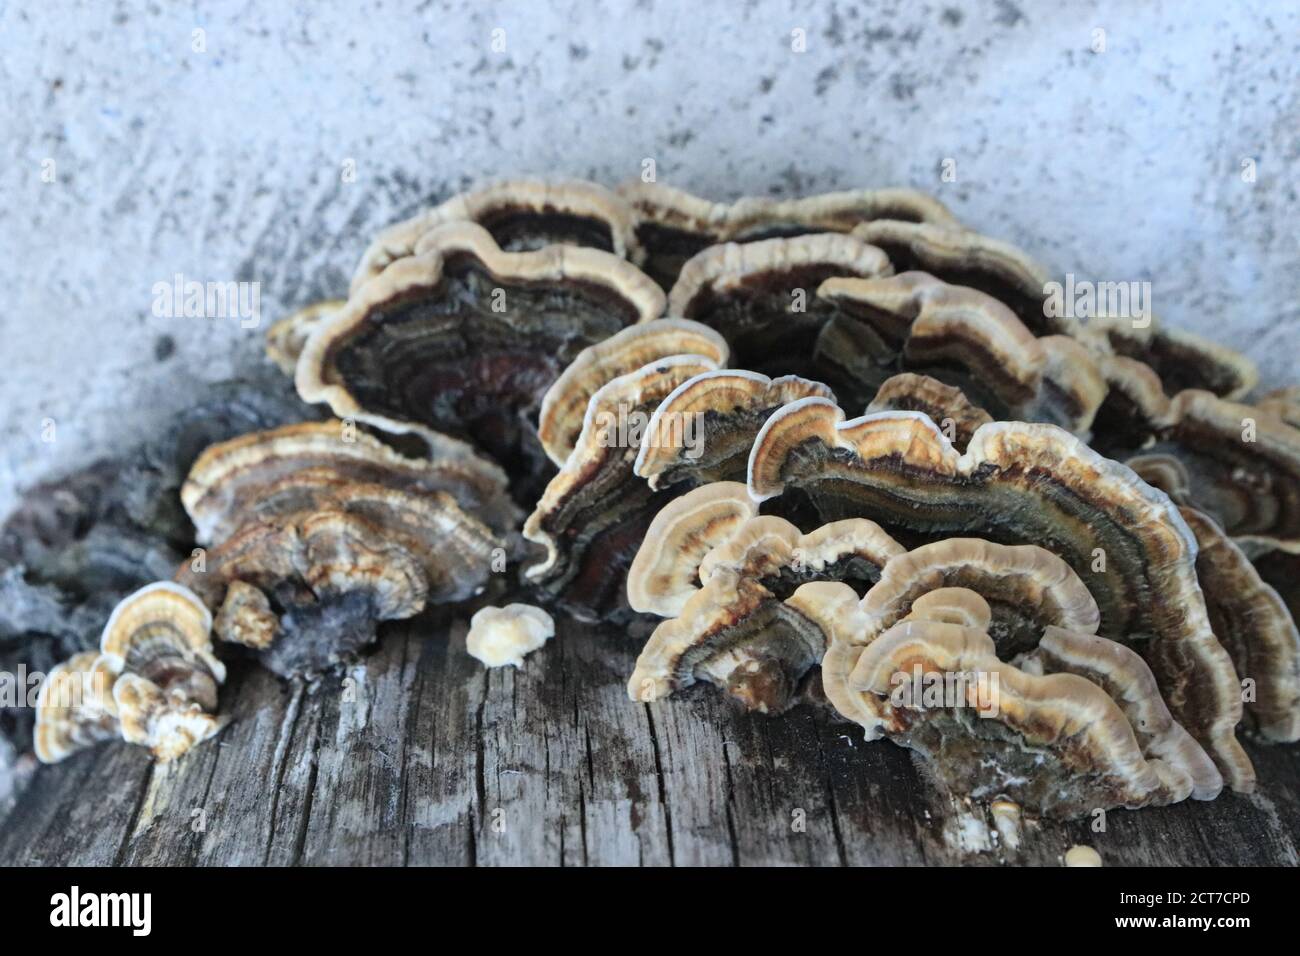 Tree fungi Turkey Tail mushroom (Trametes versicolor) growing on decaying tree trunk Stock Photo